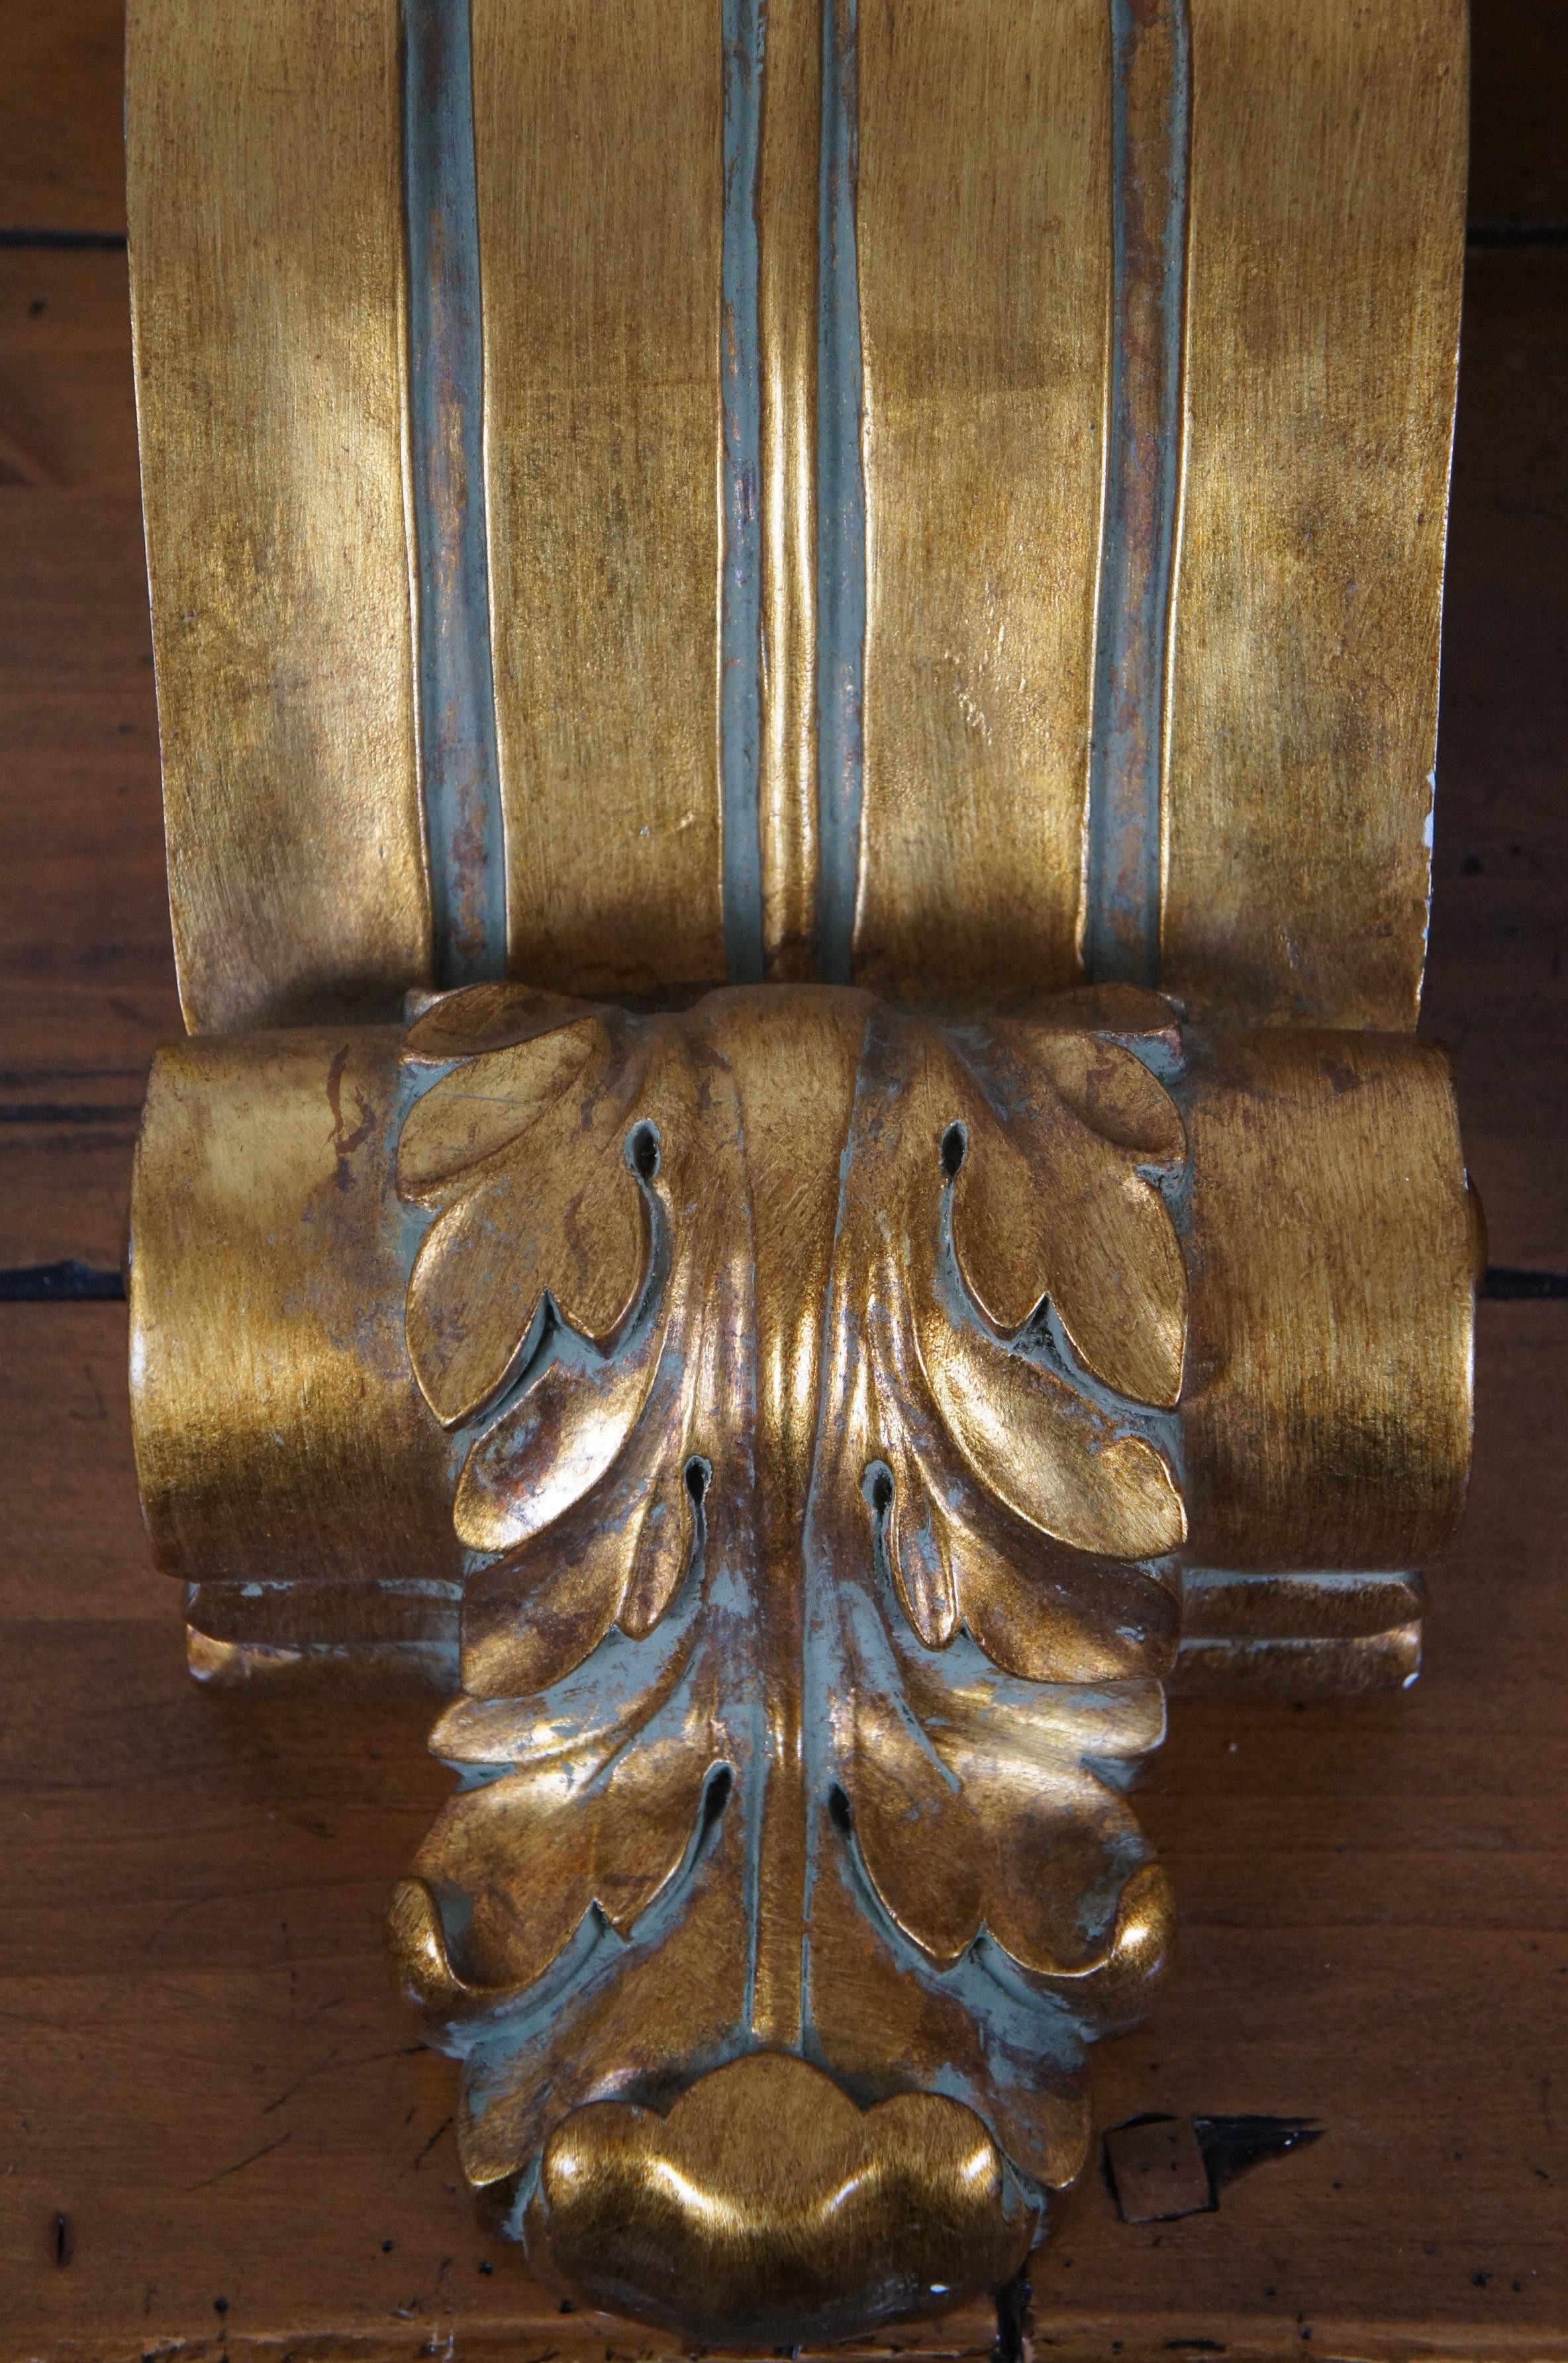 2 große verschnörkelte Acanthus Gold vergoldet Wood Corbel Wandhalterung Sconce Regale 20